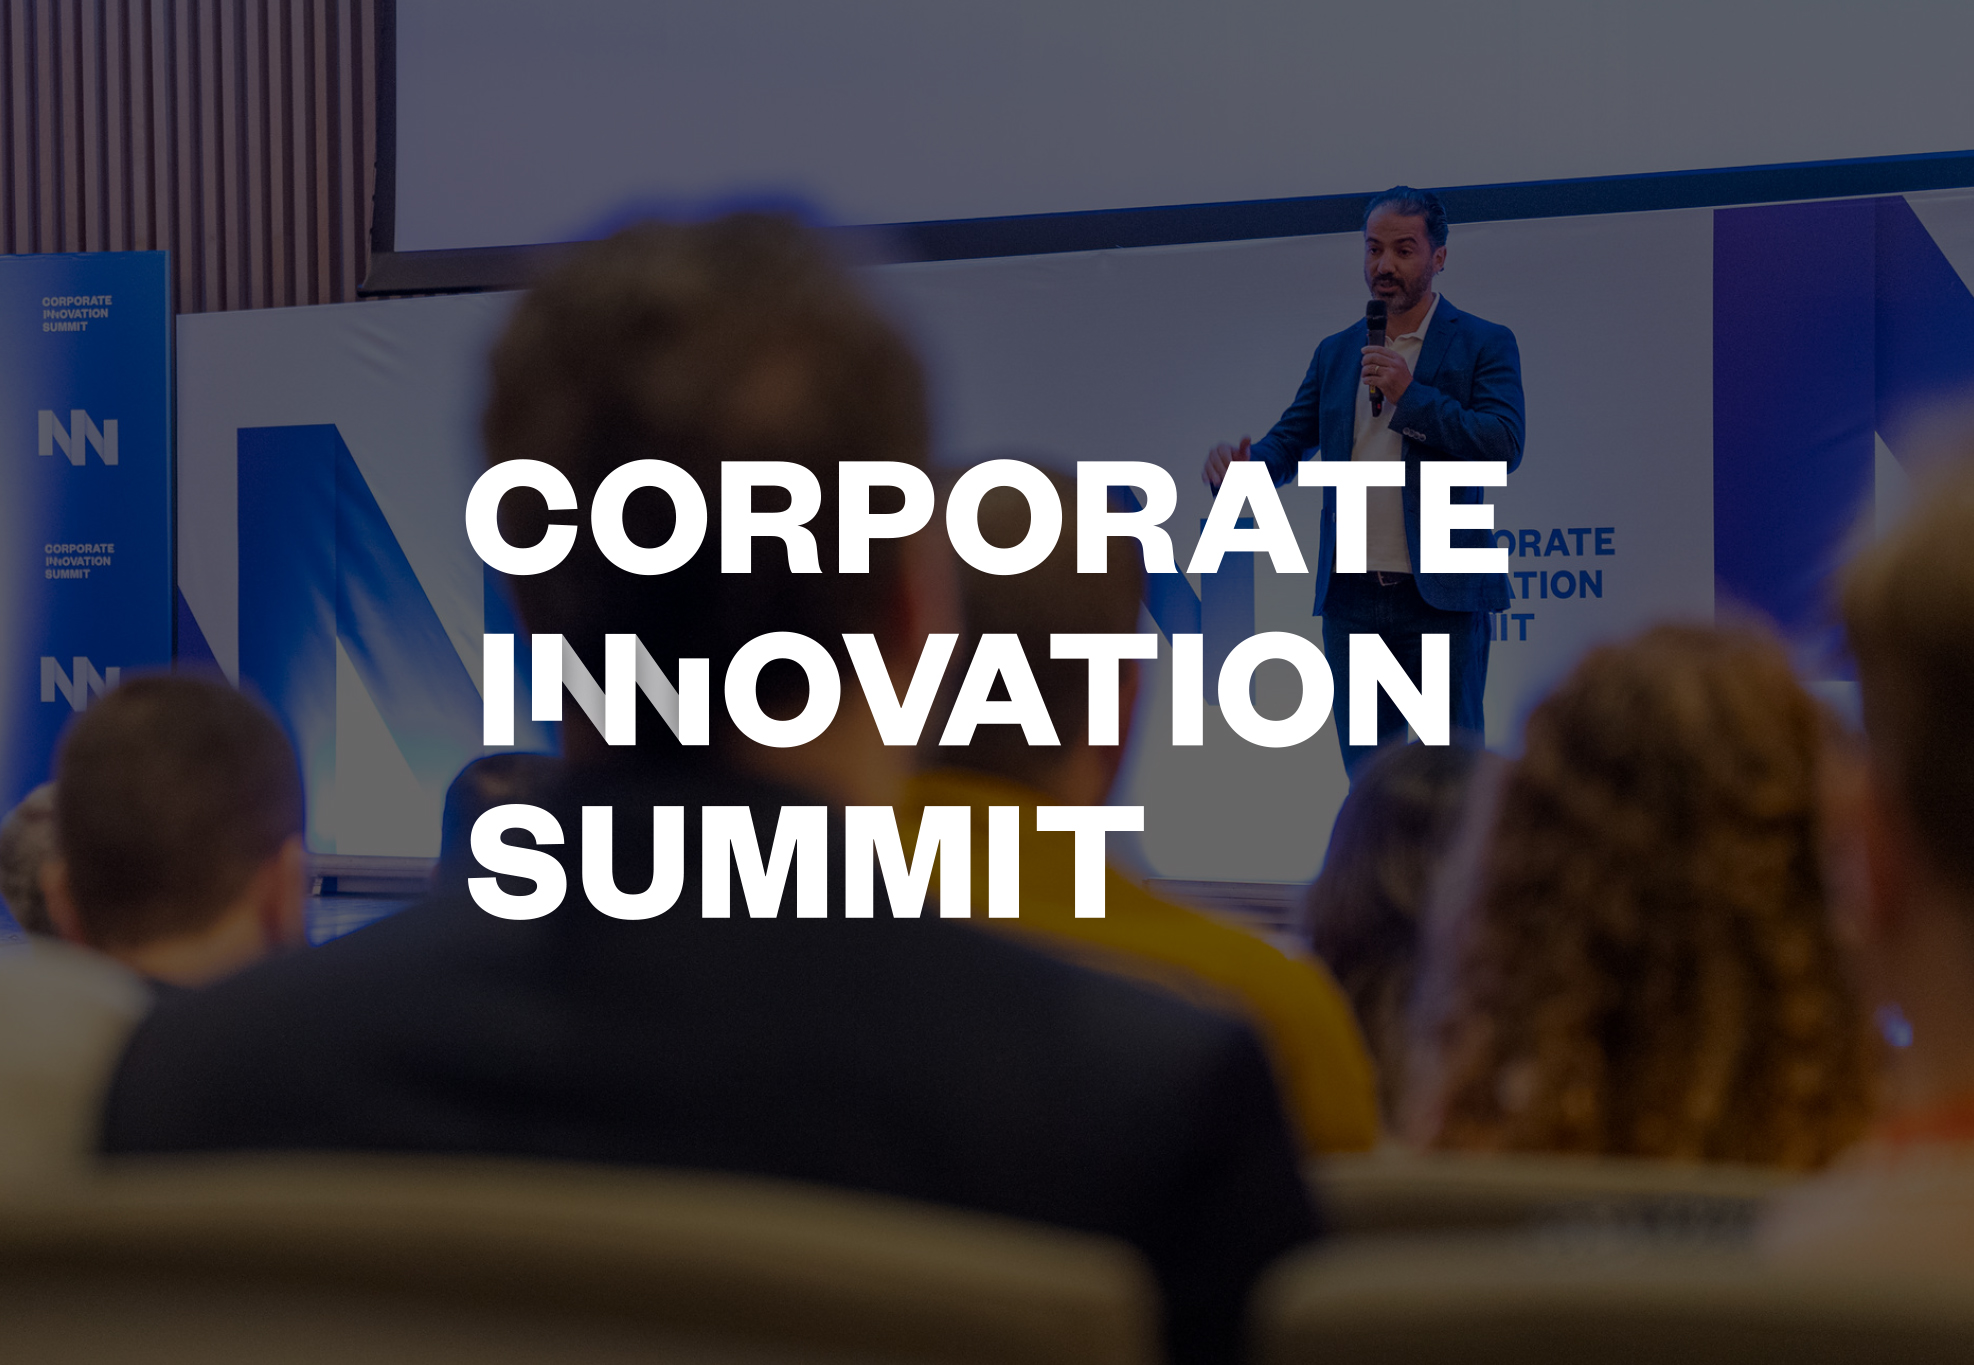 corporate innovation summit track at web summit rio